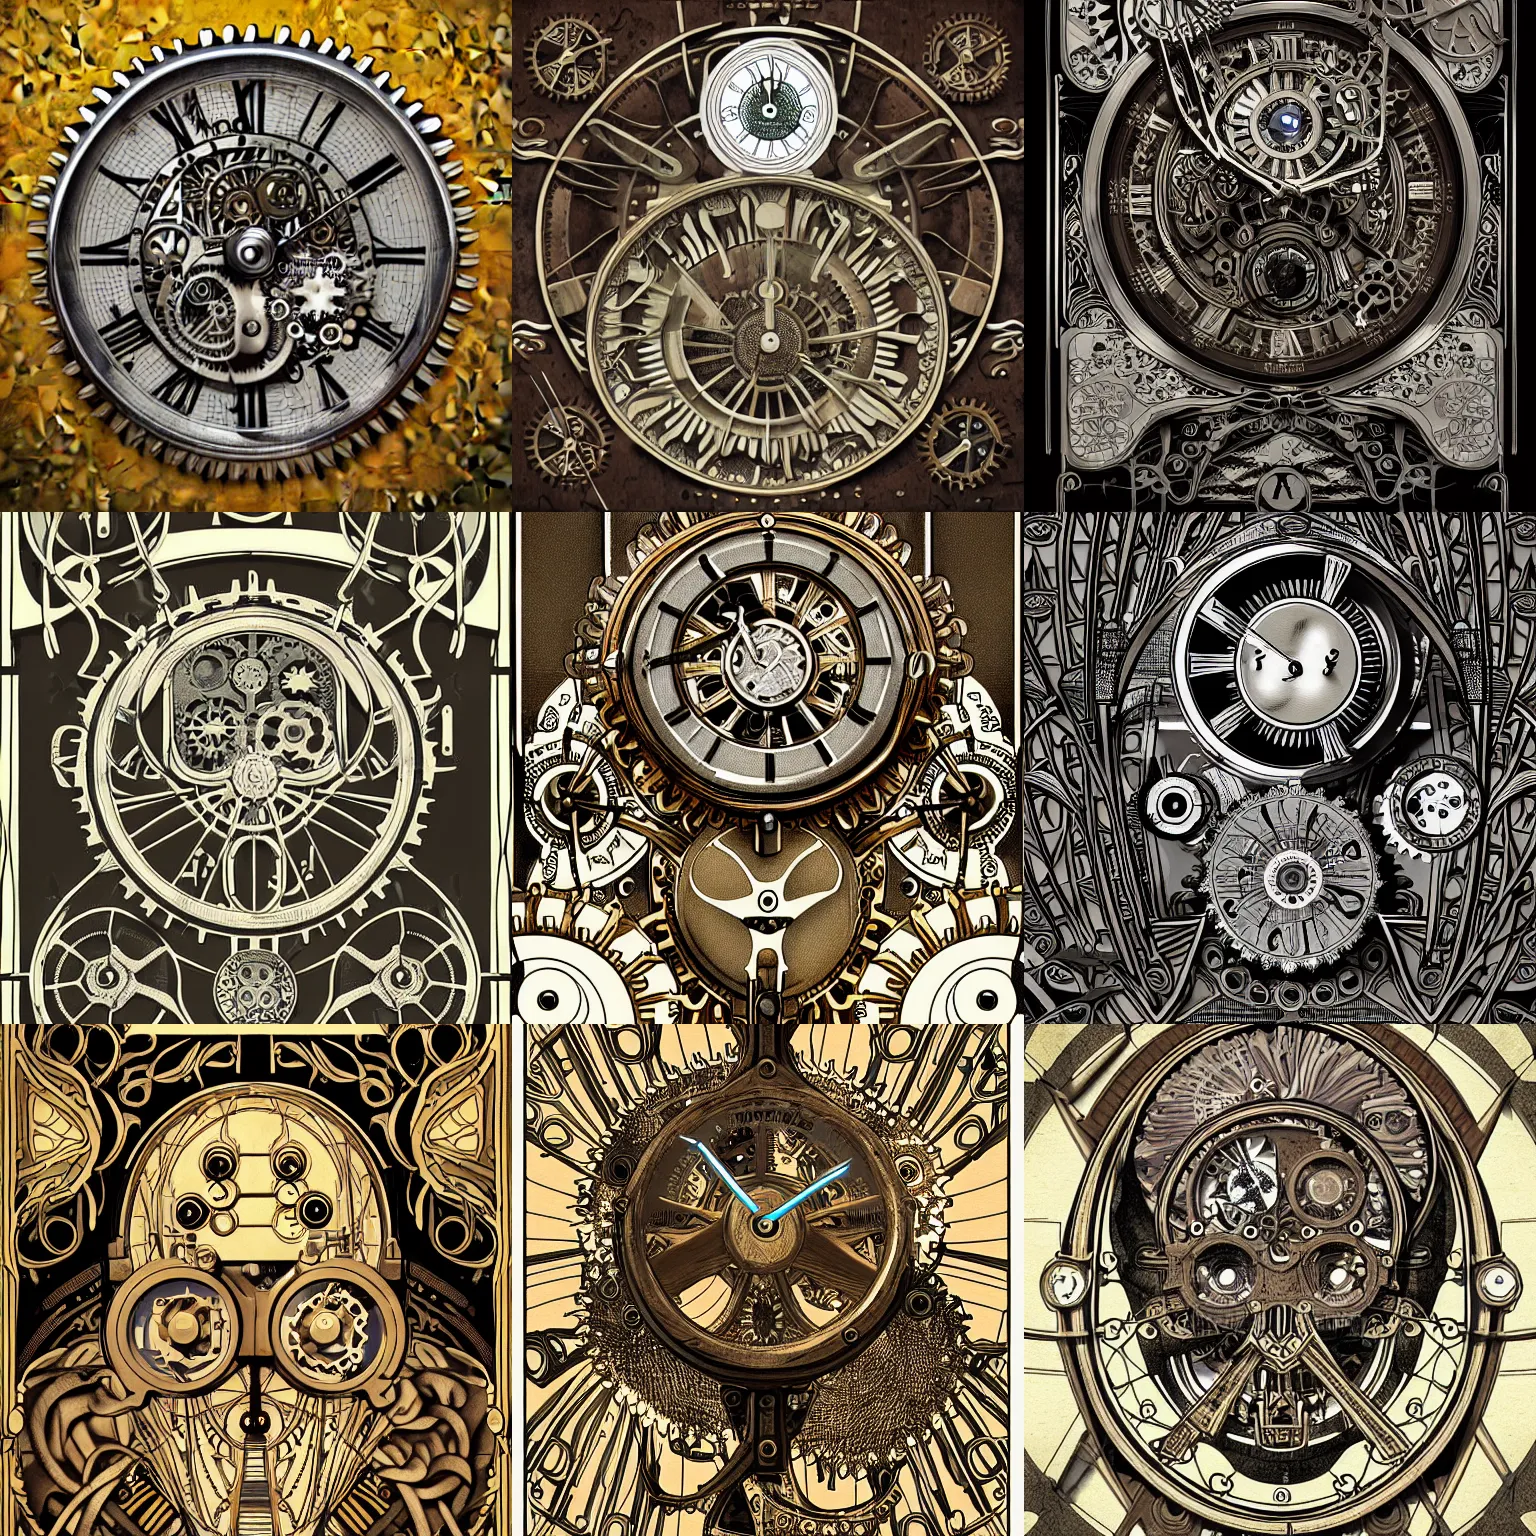 Prompt: ultra realistic illustration of old man cyborg clockwork gears art nouveau filgree scrollwork